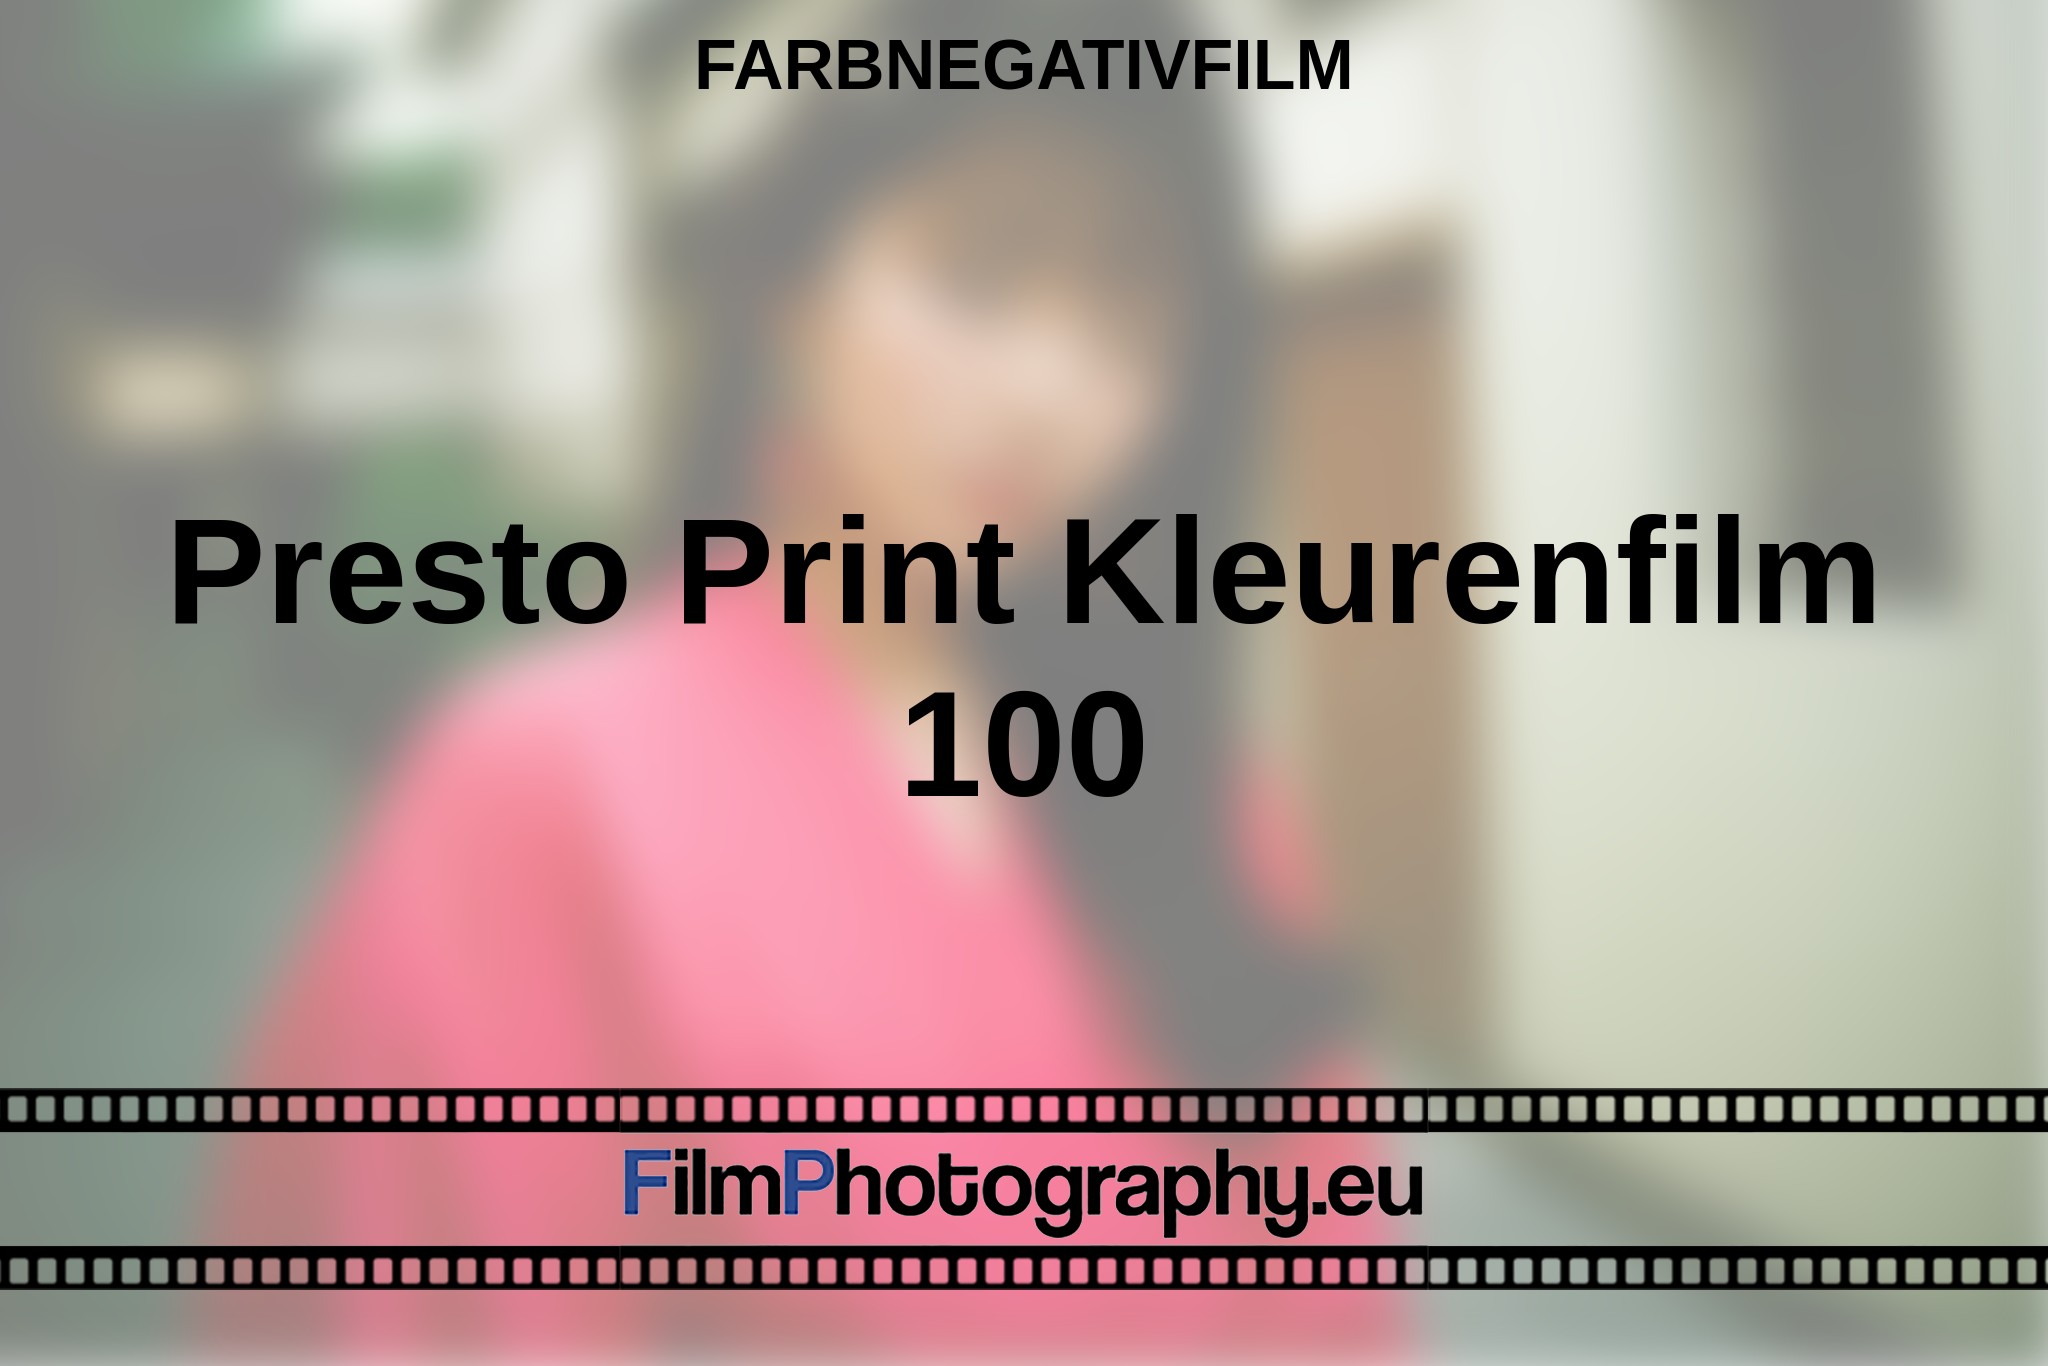 presto-print-kleurenfilm-100-farbnegativfilm-bnv.jpg